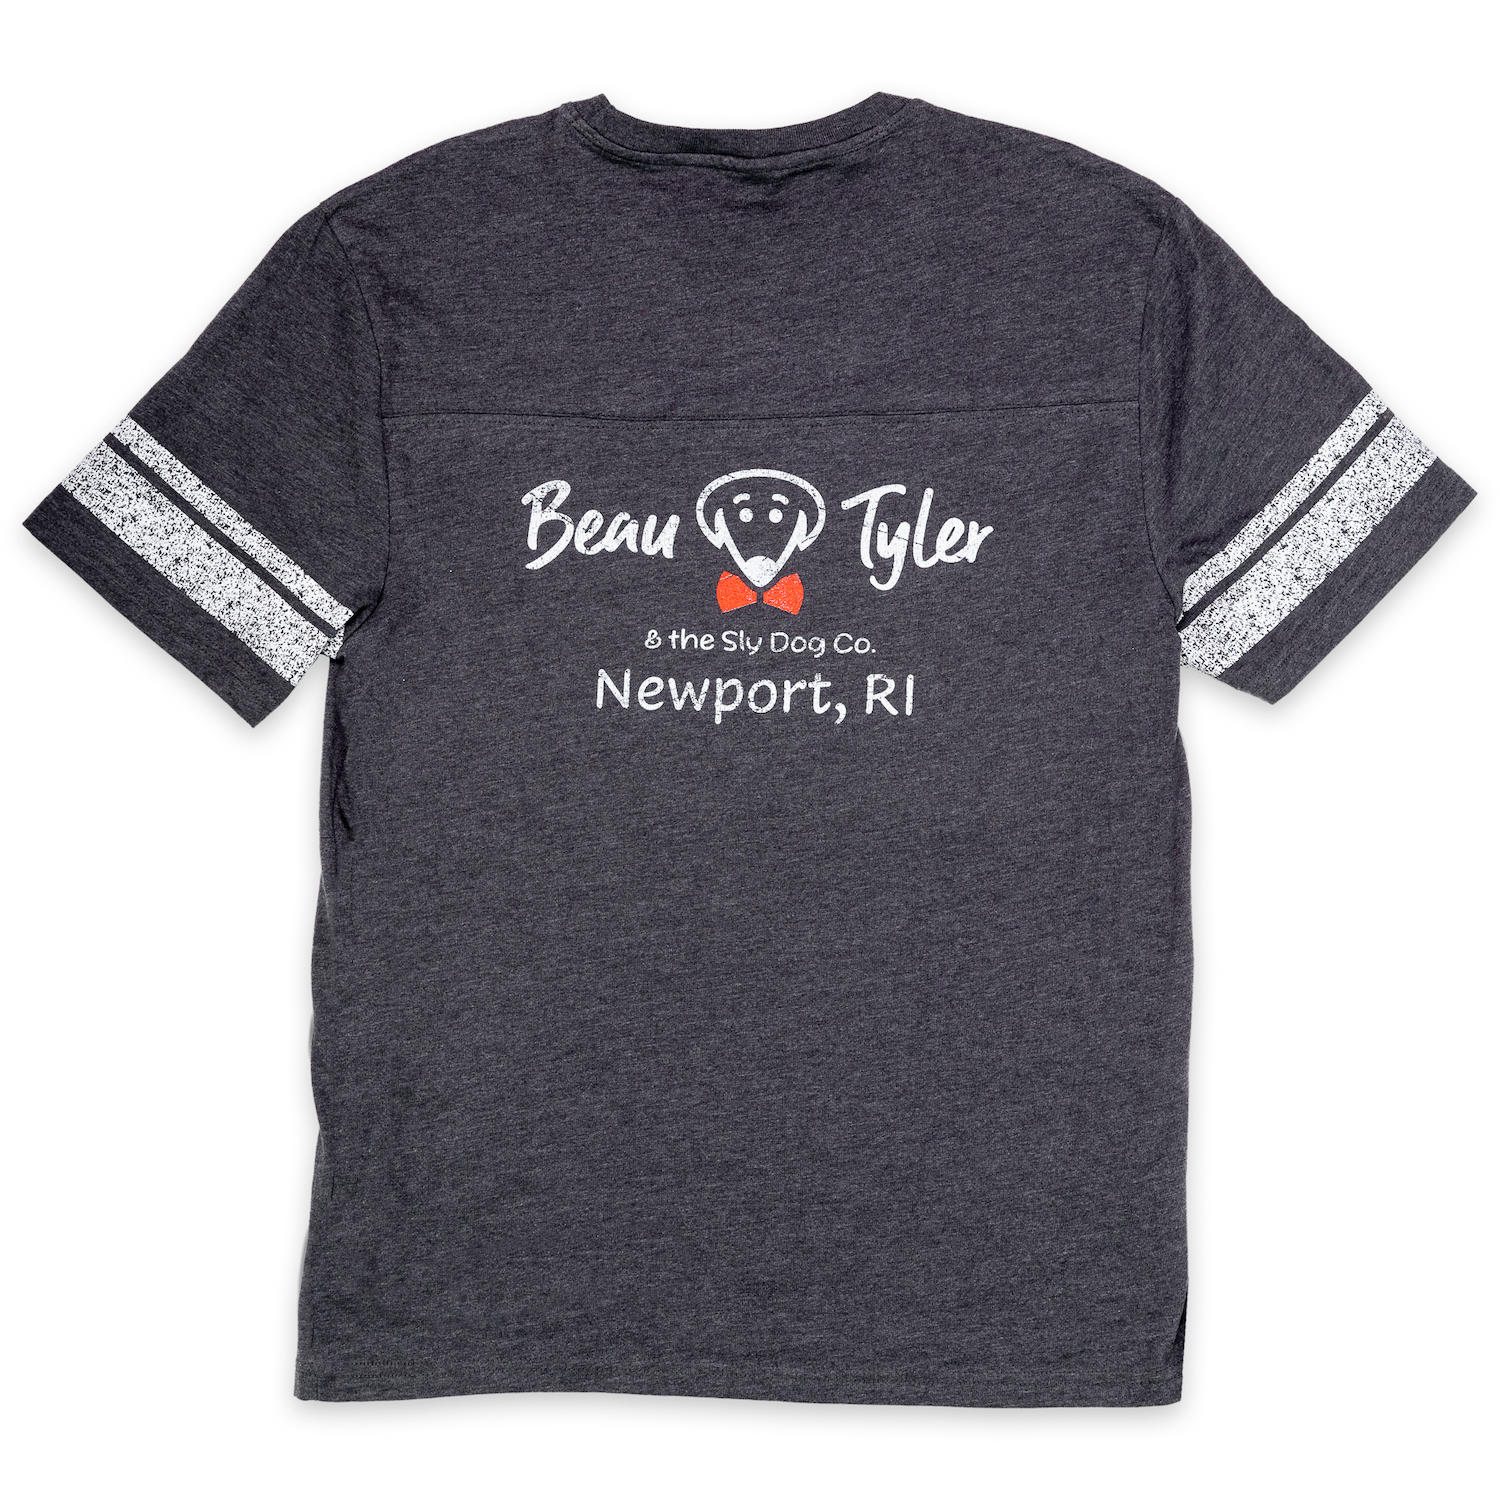 Beau Tyler - Thunderbird shirt back gray with Newport